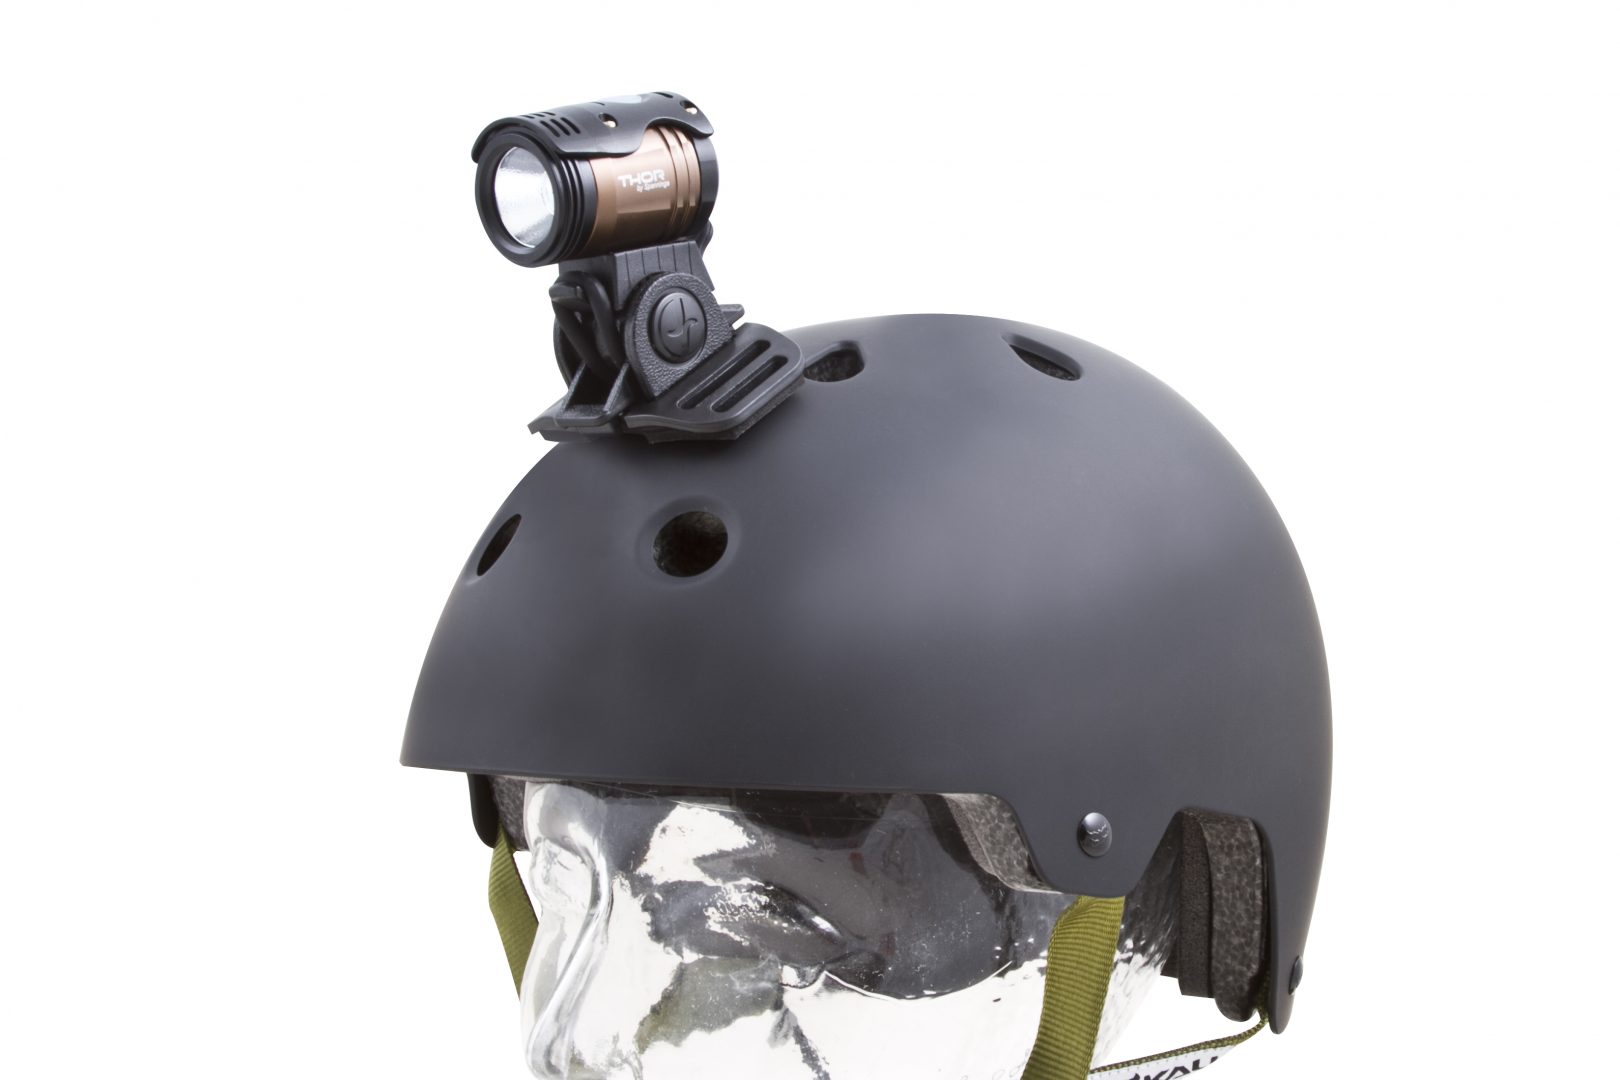 Thor 1100 on helmet with adaptor